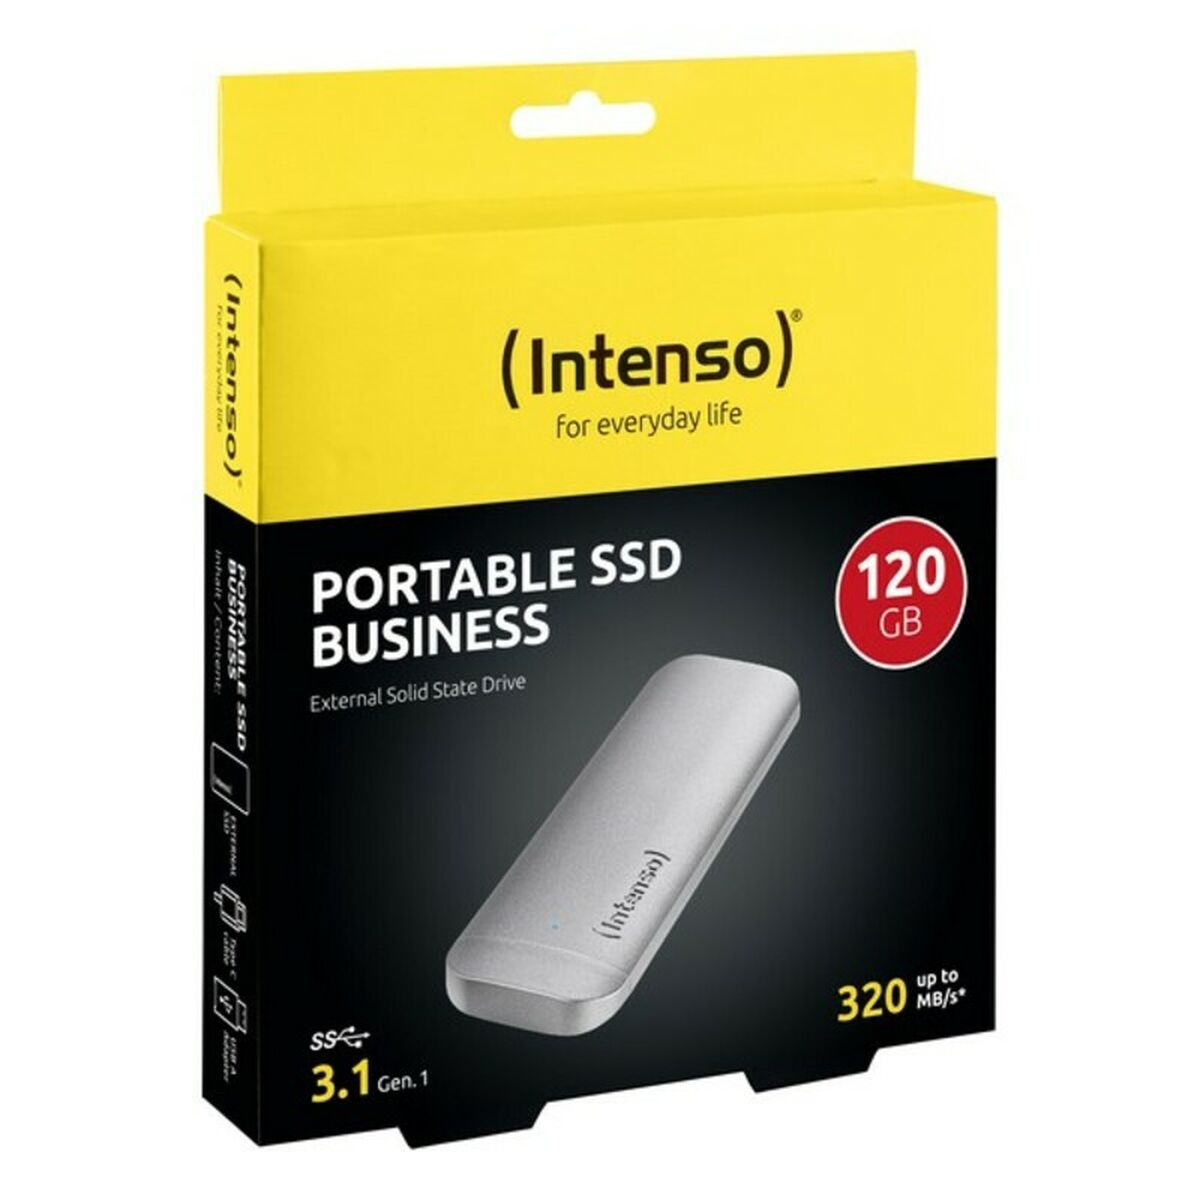 BUSINESS GB 120 3824430 Anthrazit EXTERNAL extern, INTENSO SSD 120GB, SSD,